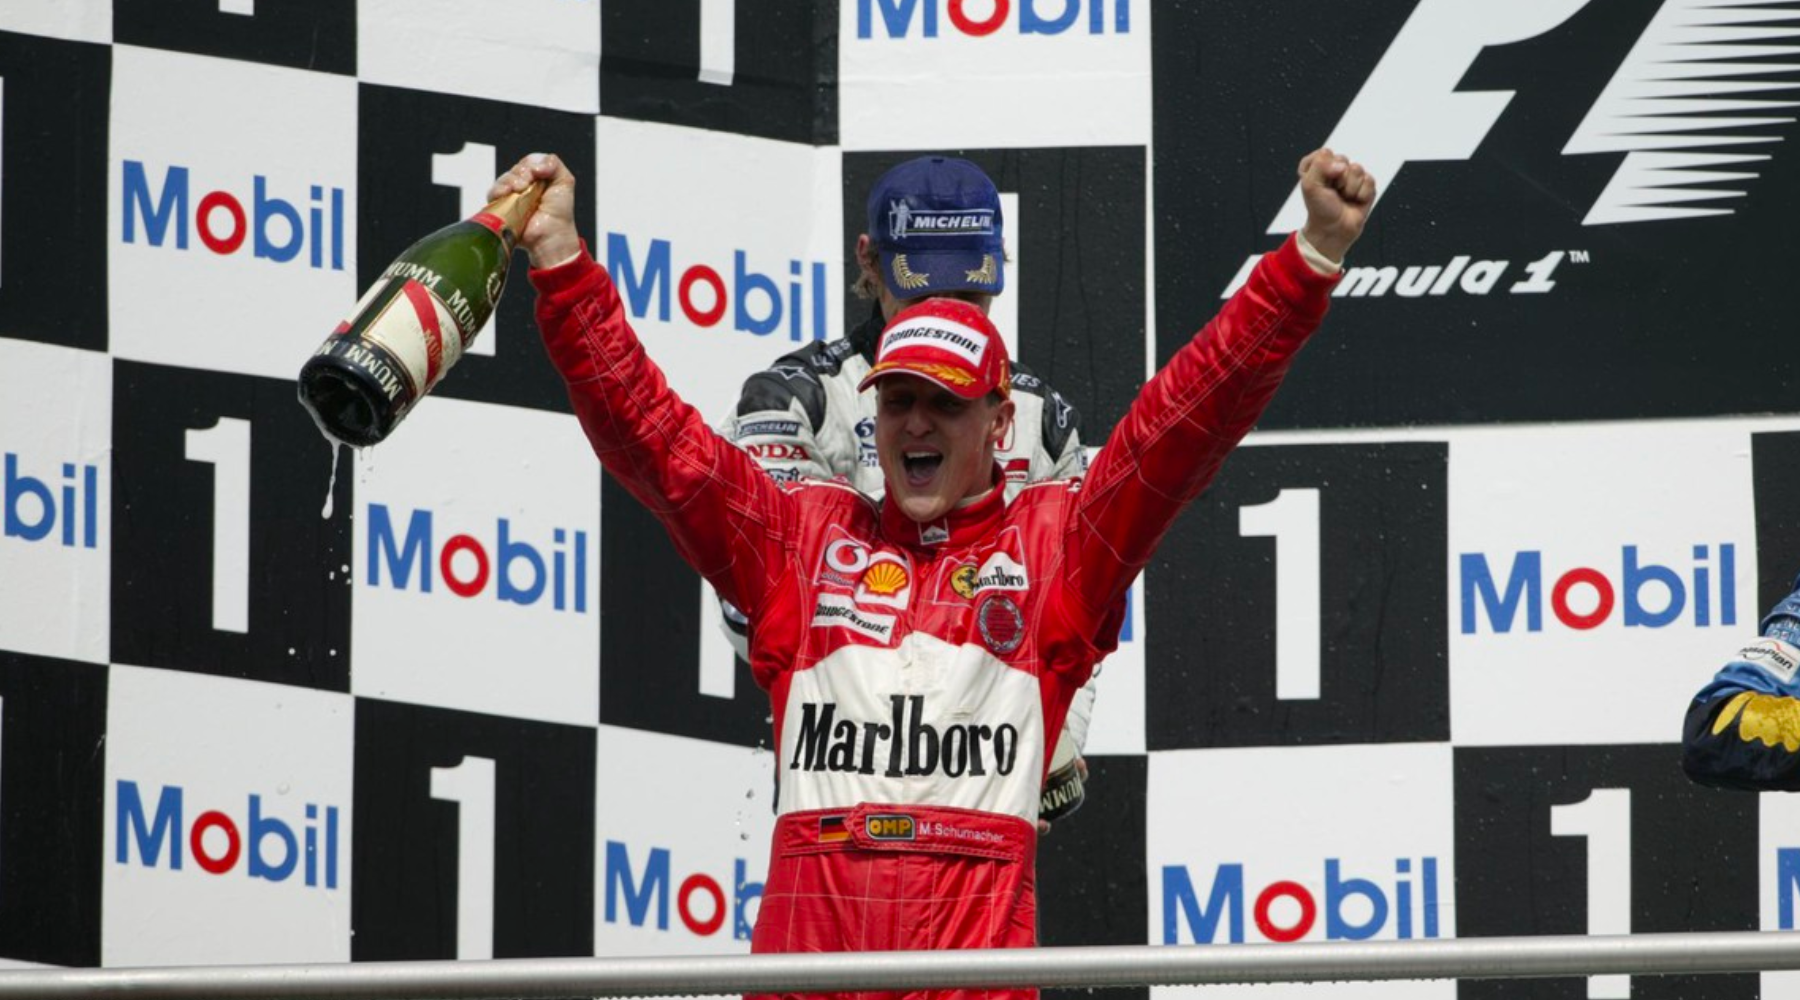   Cortesía: Michael Schumacher Official Website.  